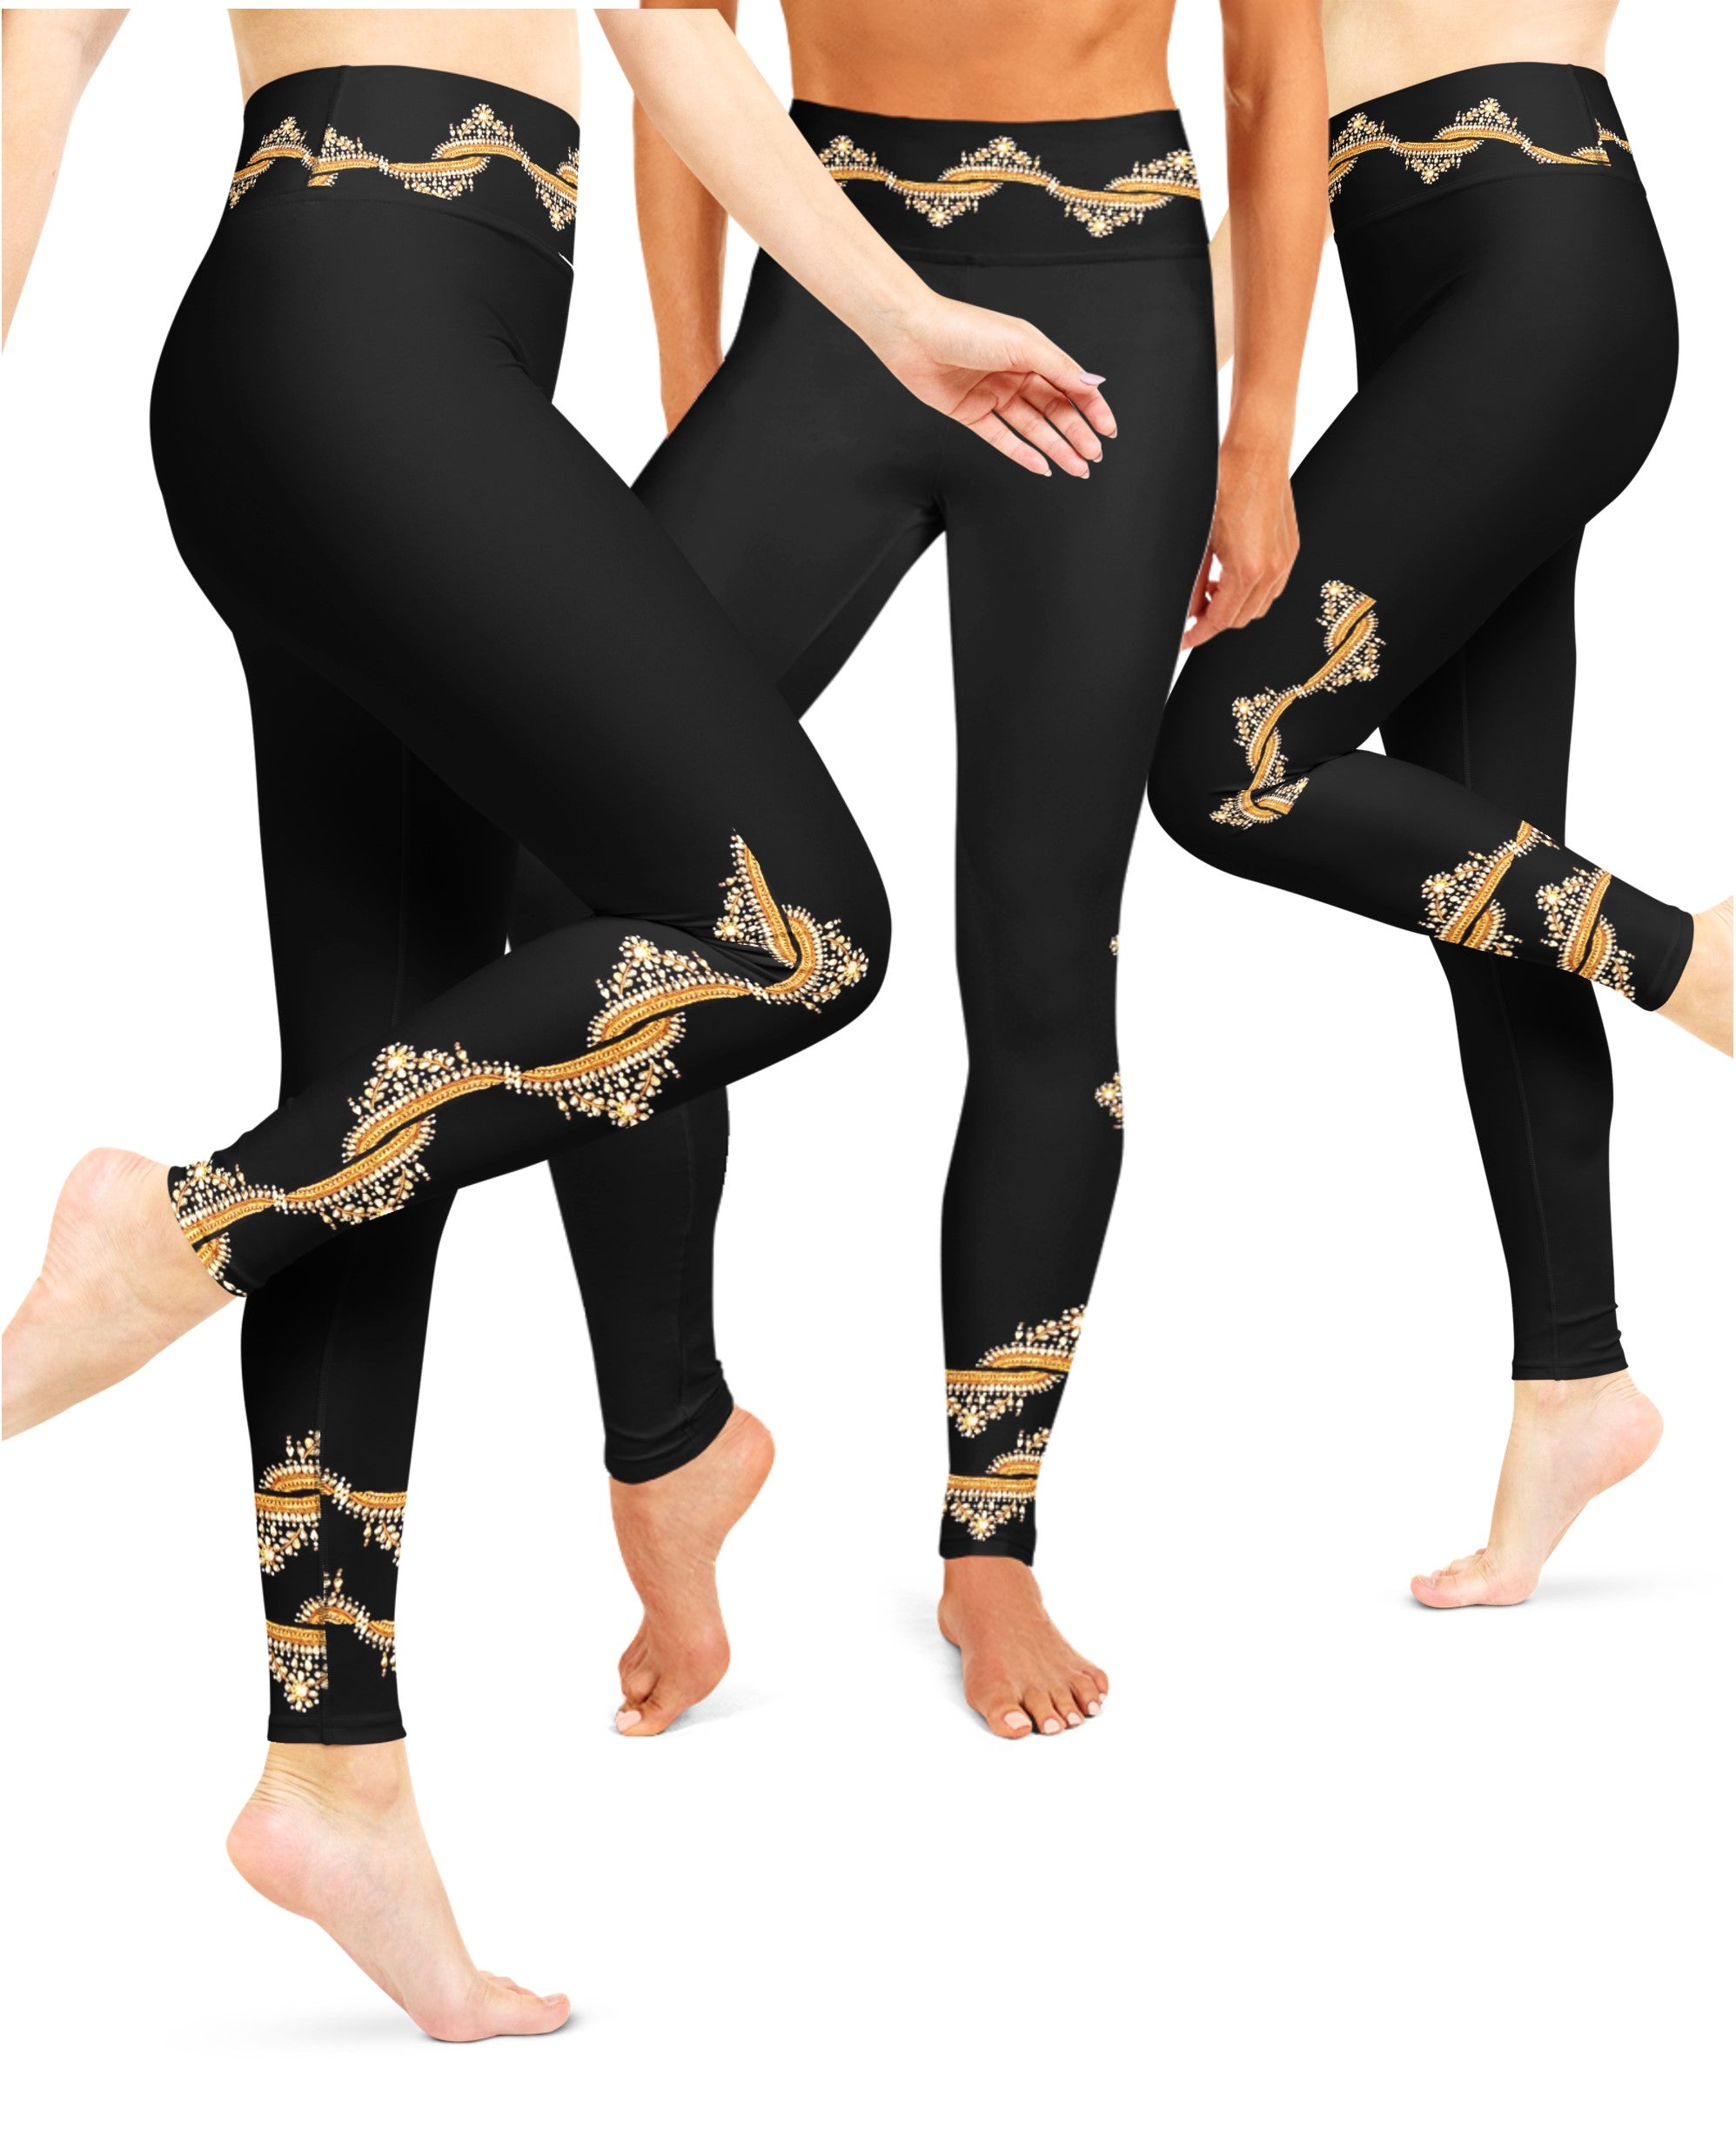 Boho Yoga pants. Black yoga leggings. Ethnic gym pants. Dance leggings.  From Artikrti.